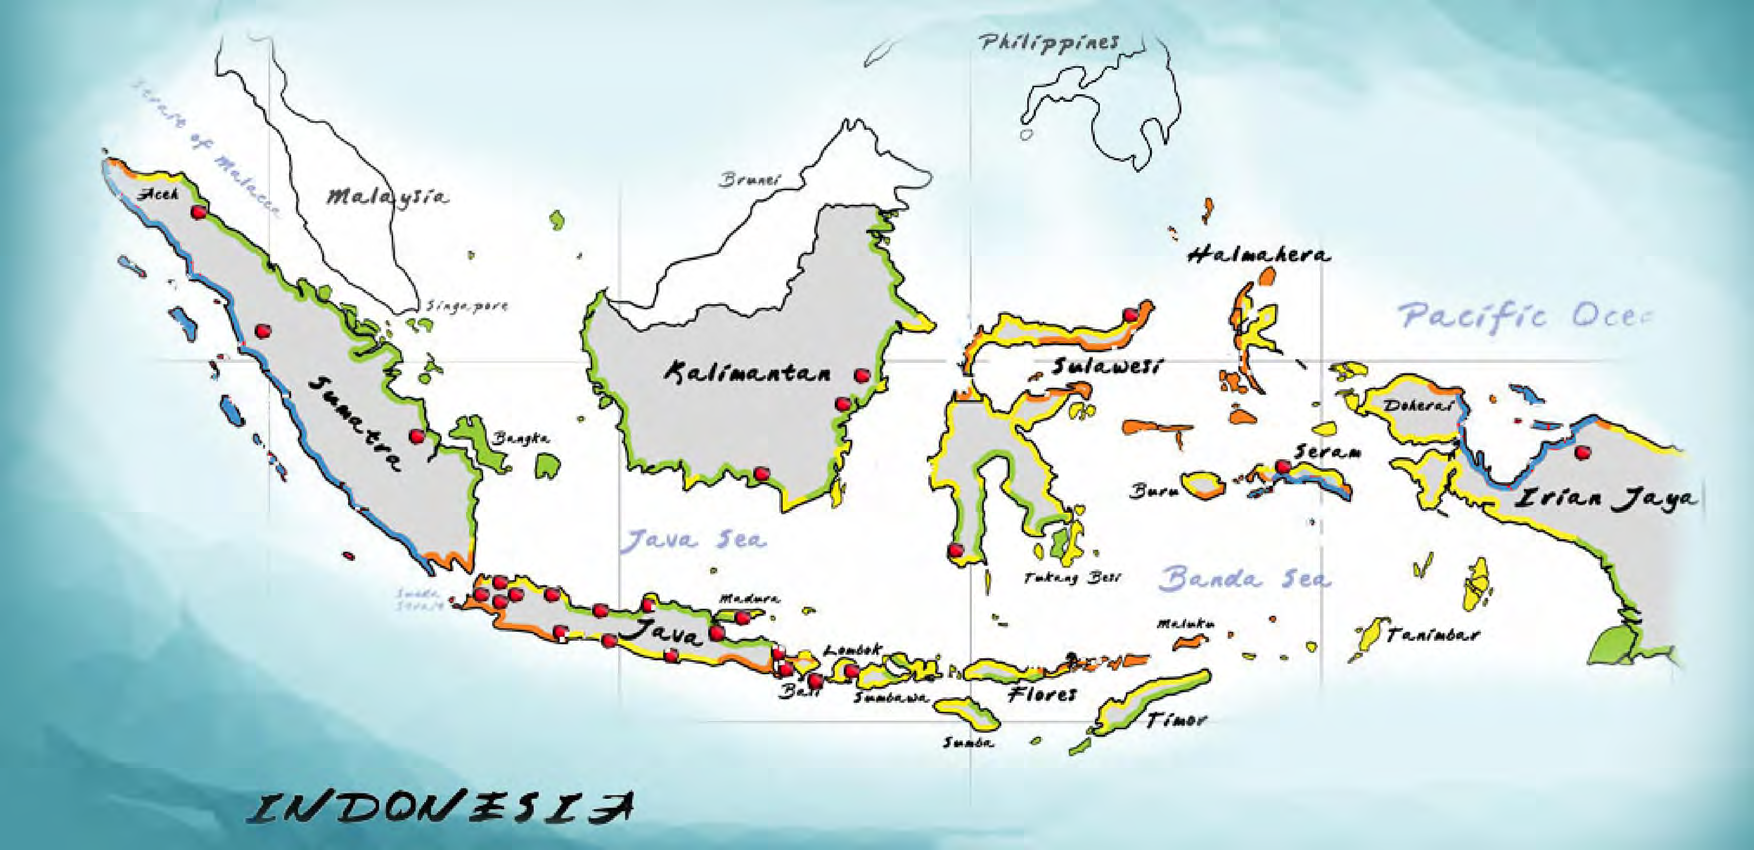 (Peta Indonesia) Klien Kami Tersebar di Seluruh Penjuru Kota di Indonesia seperti Jakarta, Bandung, Surabaya, Medan, Makasar, Semarang, Denpasar, Manado, Balikpapan, Palembang, Yogyakarta, Tangerang,